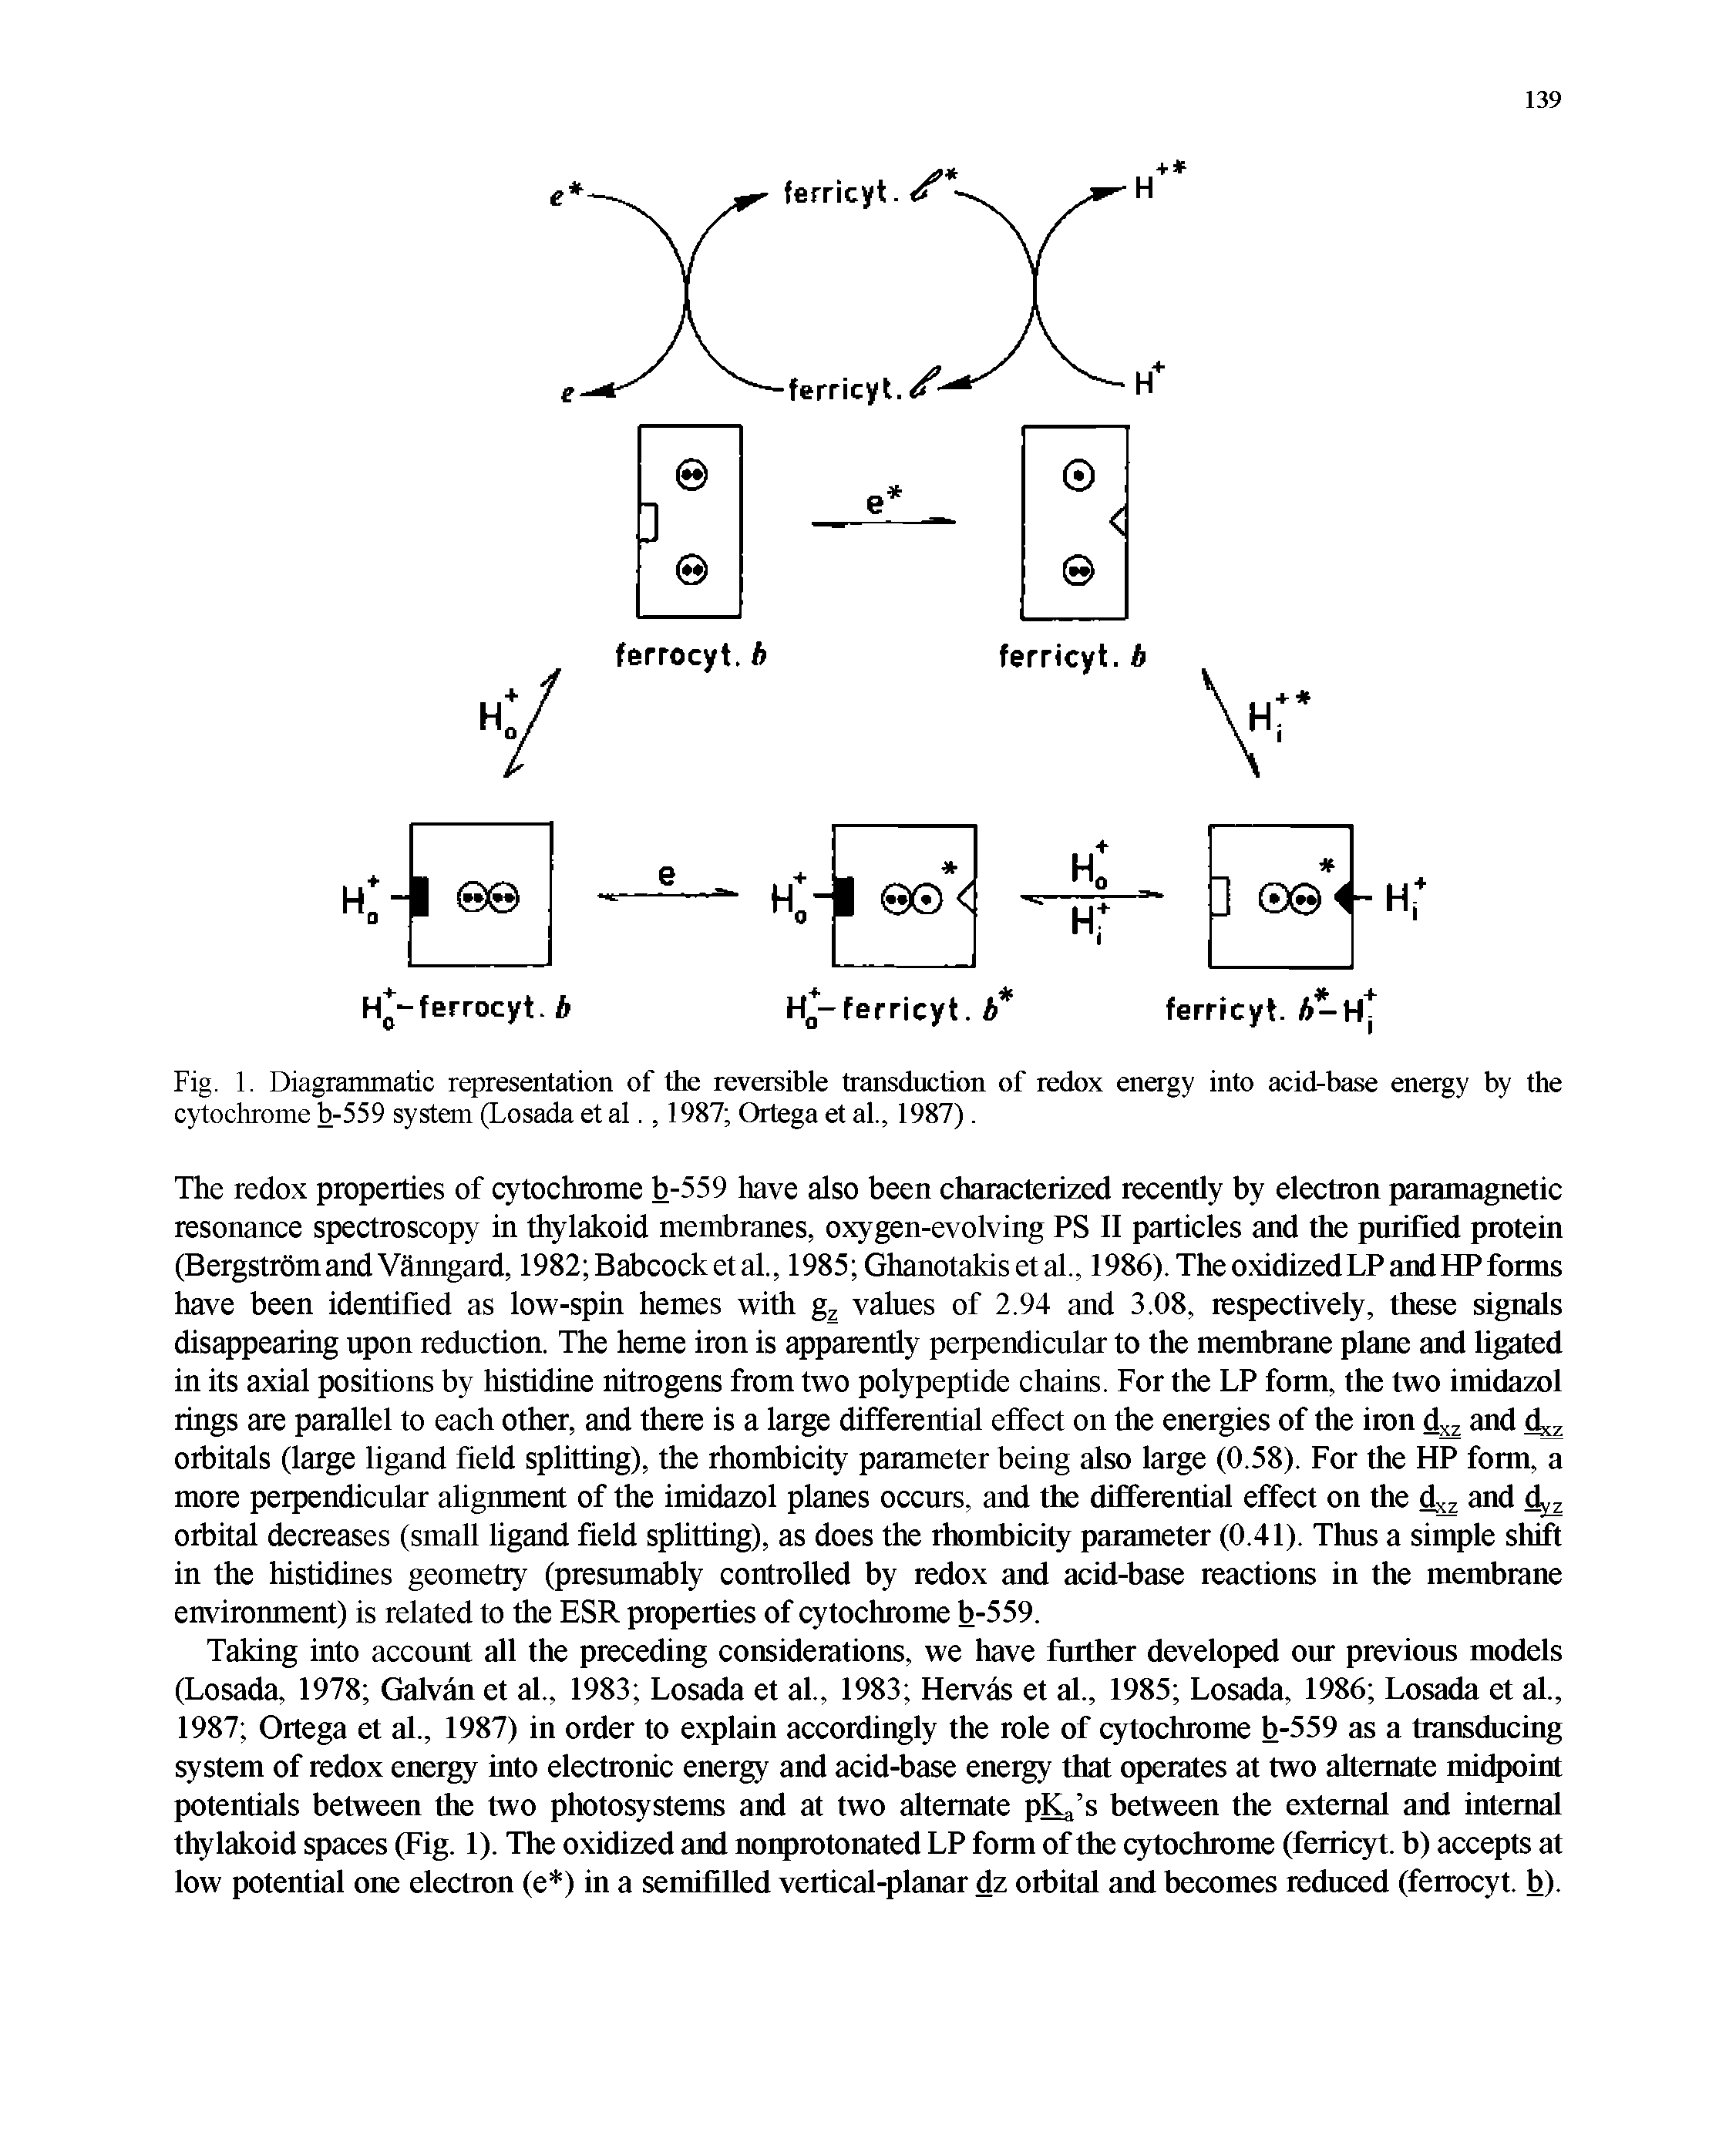 Fig. 1. Diagrammatic representation of the reversible transduction of redox energy into acid-base energy by the cytochrome b-559 system (Losada et al., 1987 Ortega et al., 1987).